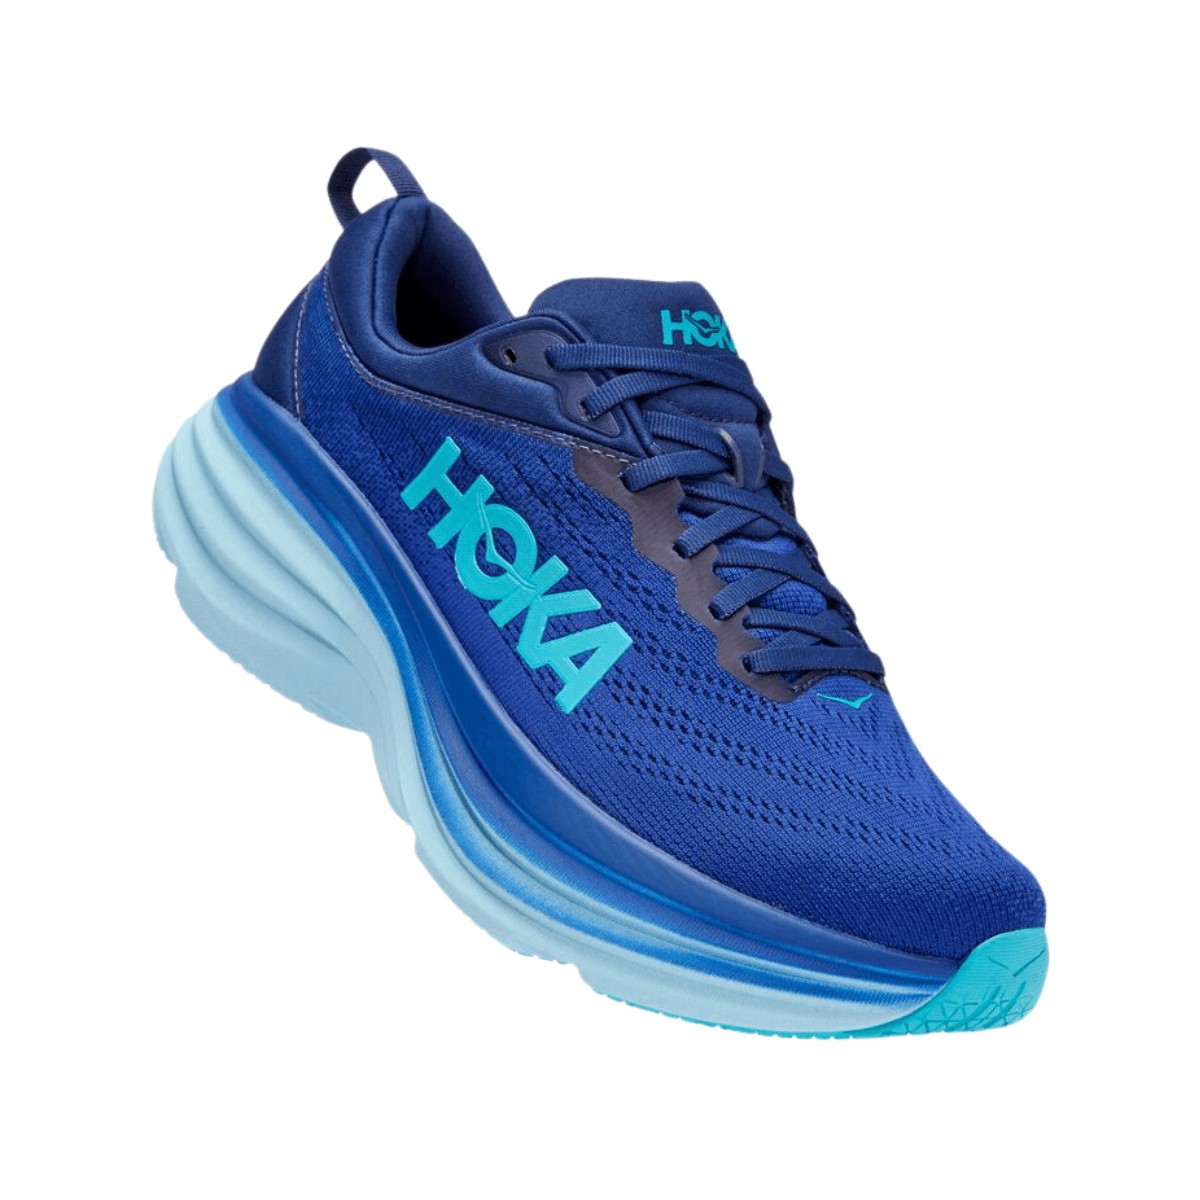 Chaussures Hoka One One Bondi 8 Bleu AW22, Taille EU 42 2/3